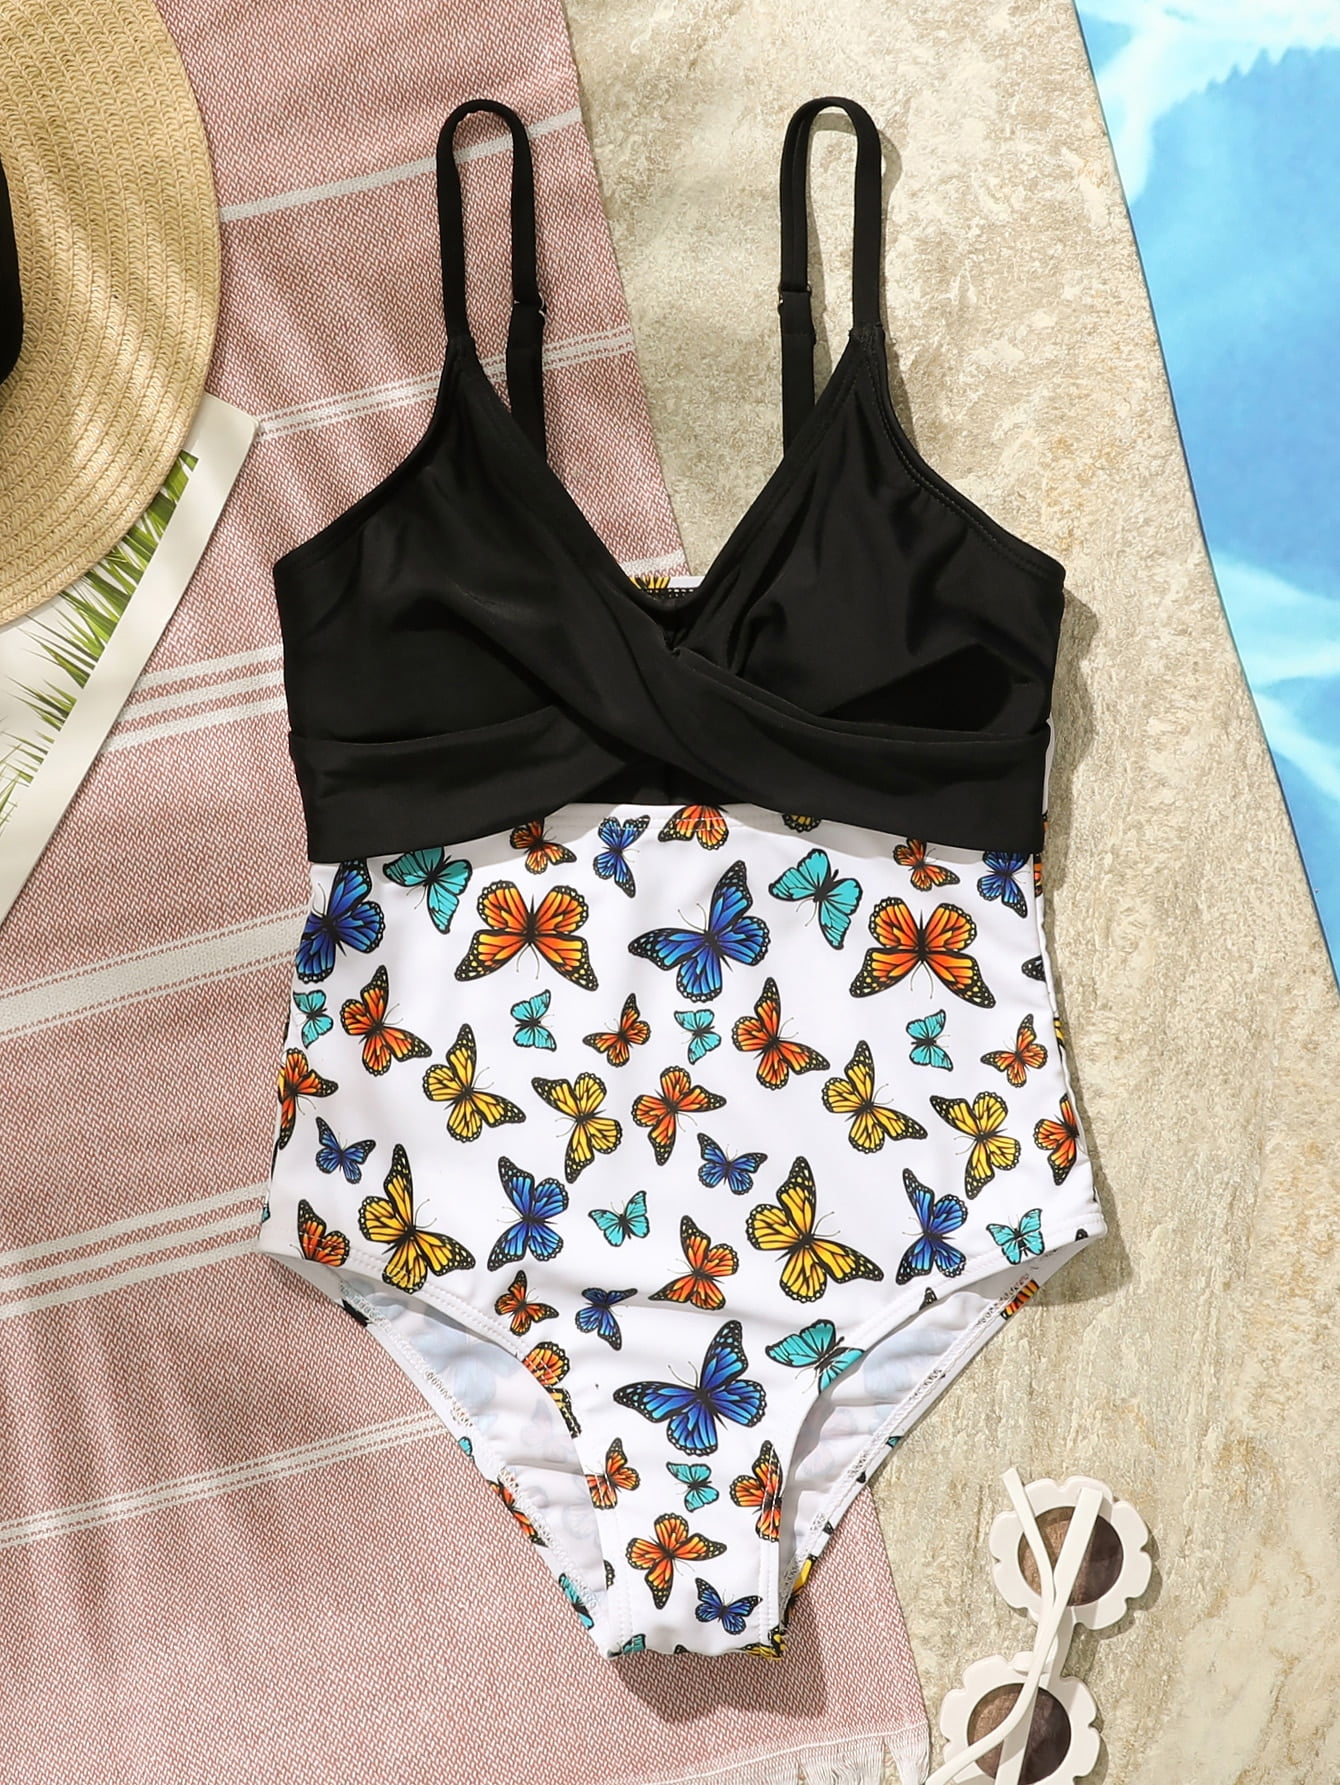 NEW Children Swimsuit Girls One Piece Swimwear Butterfly Print Swim Wear Bikinis 